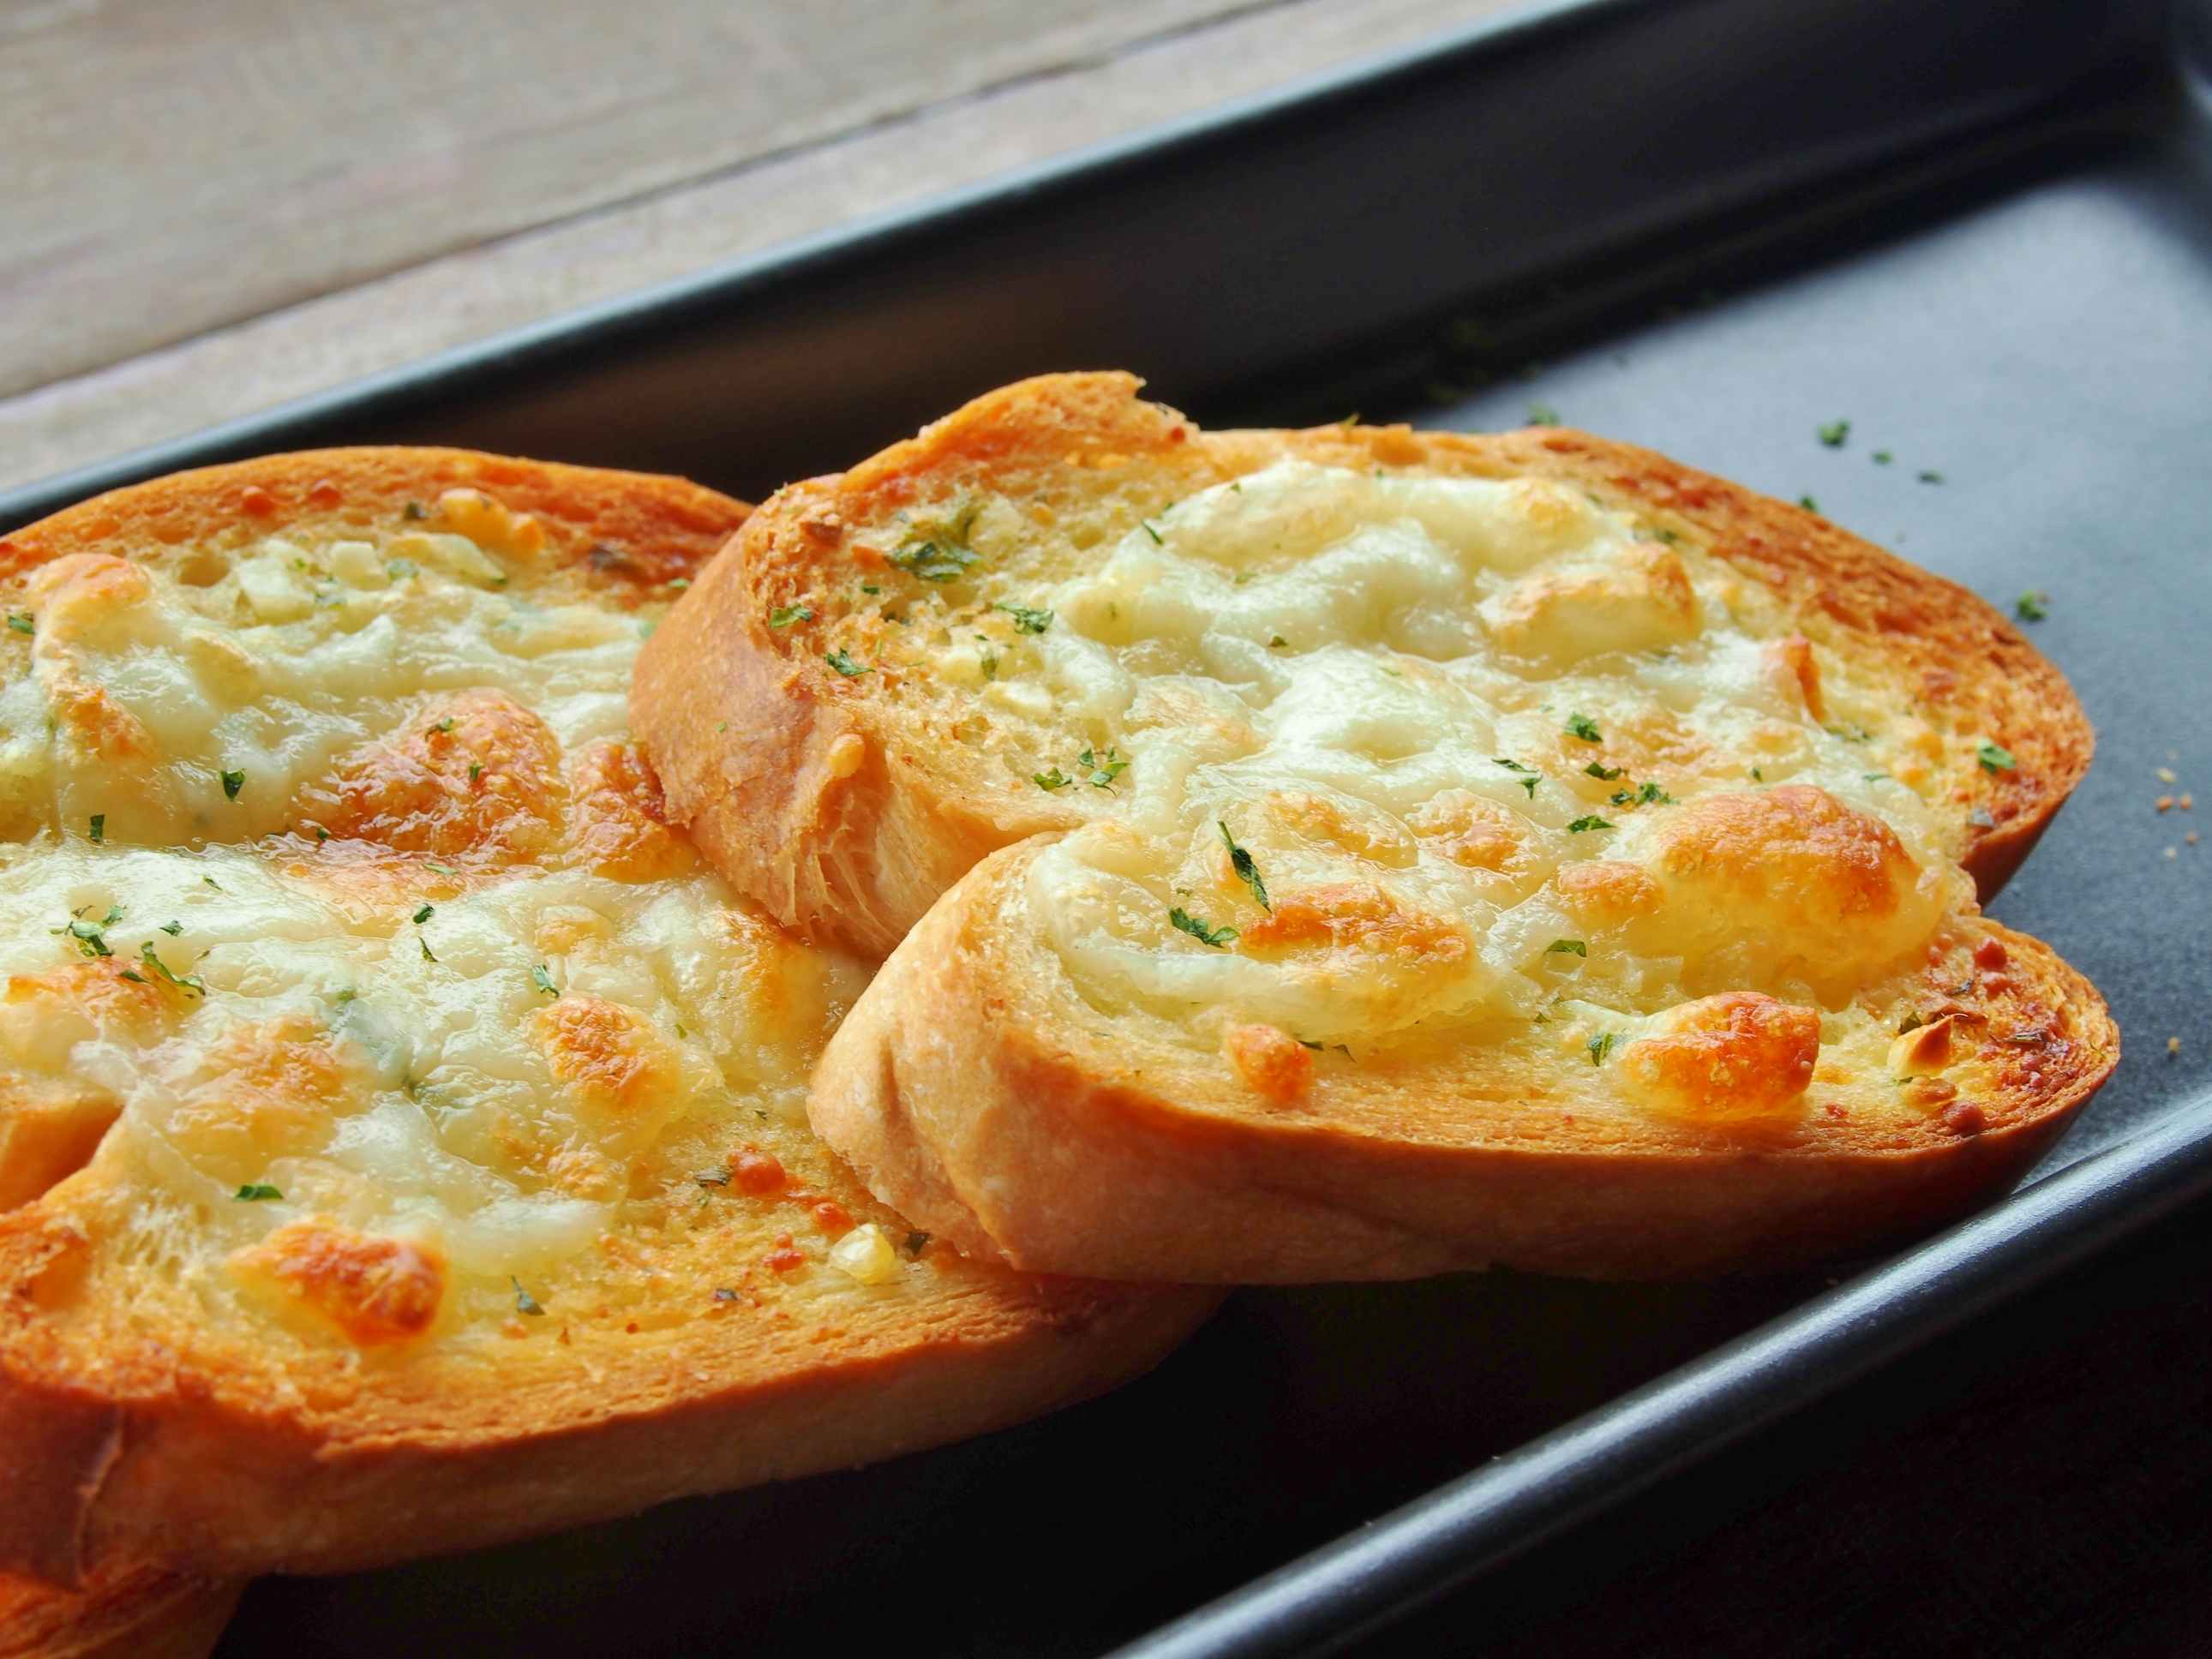 Garlic bread on a metal pan